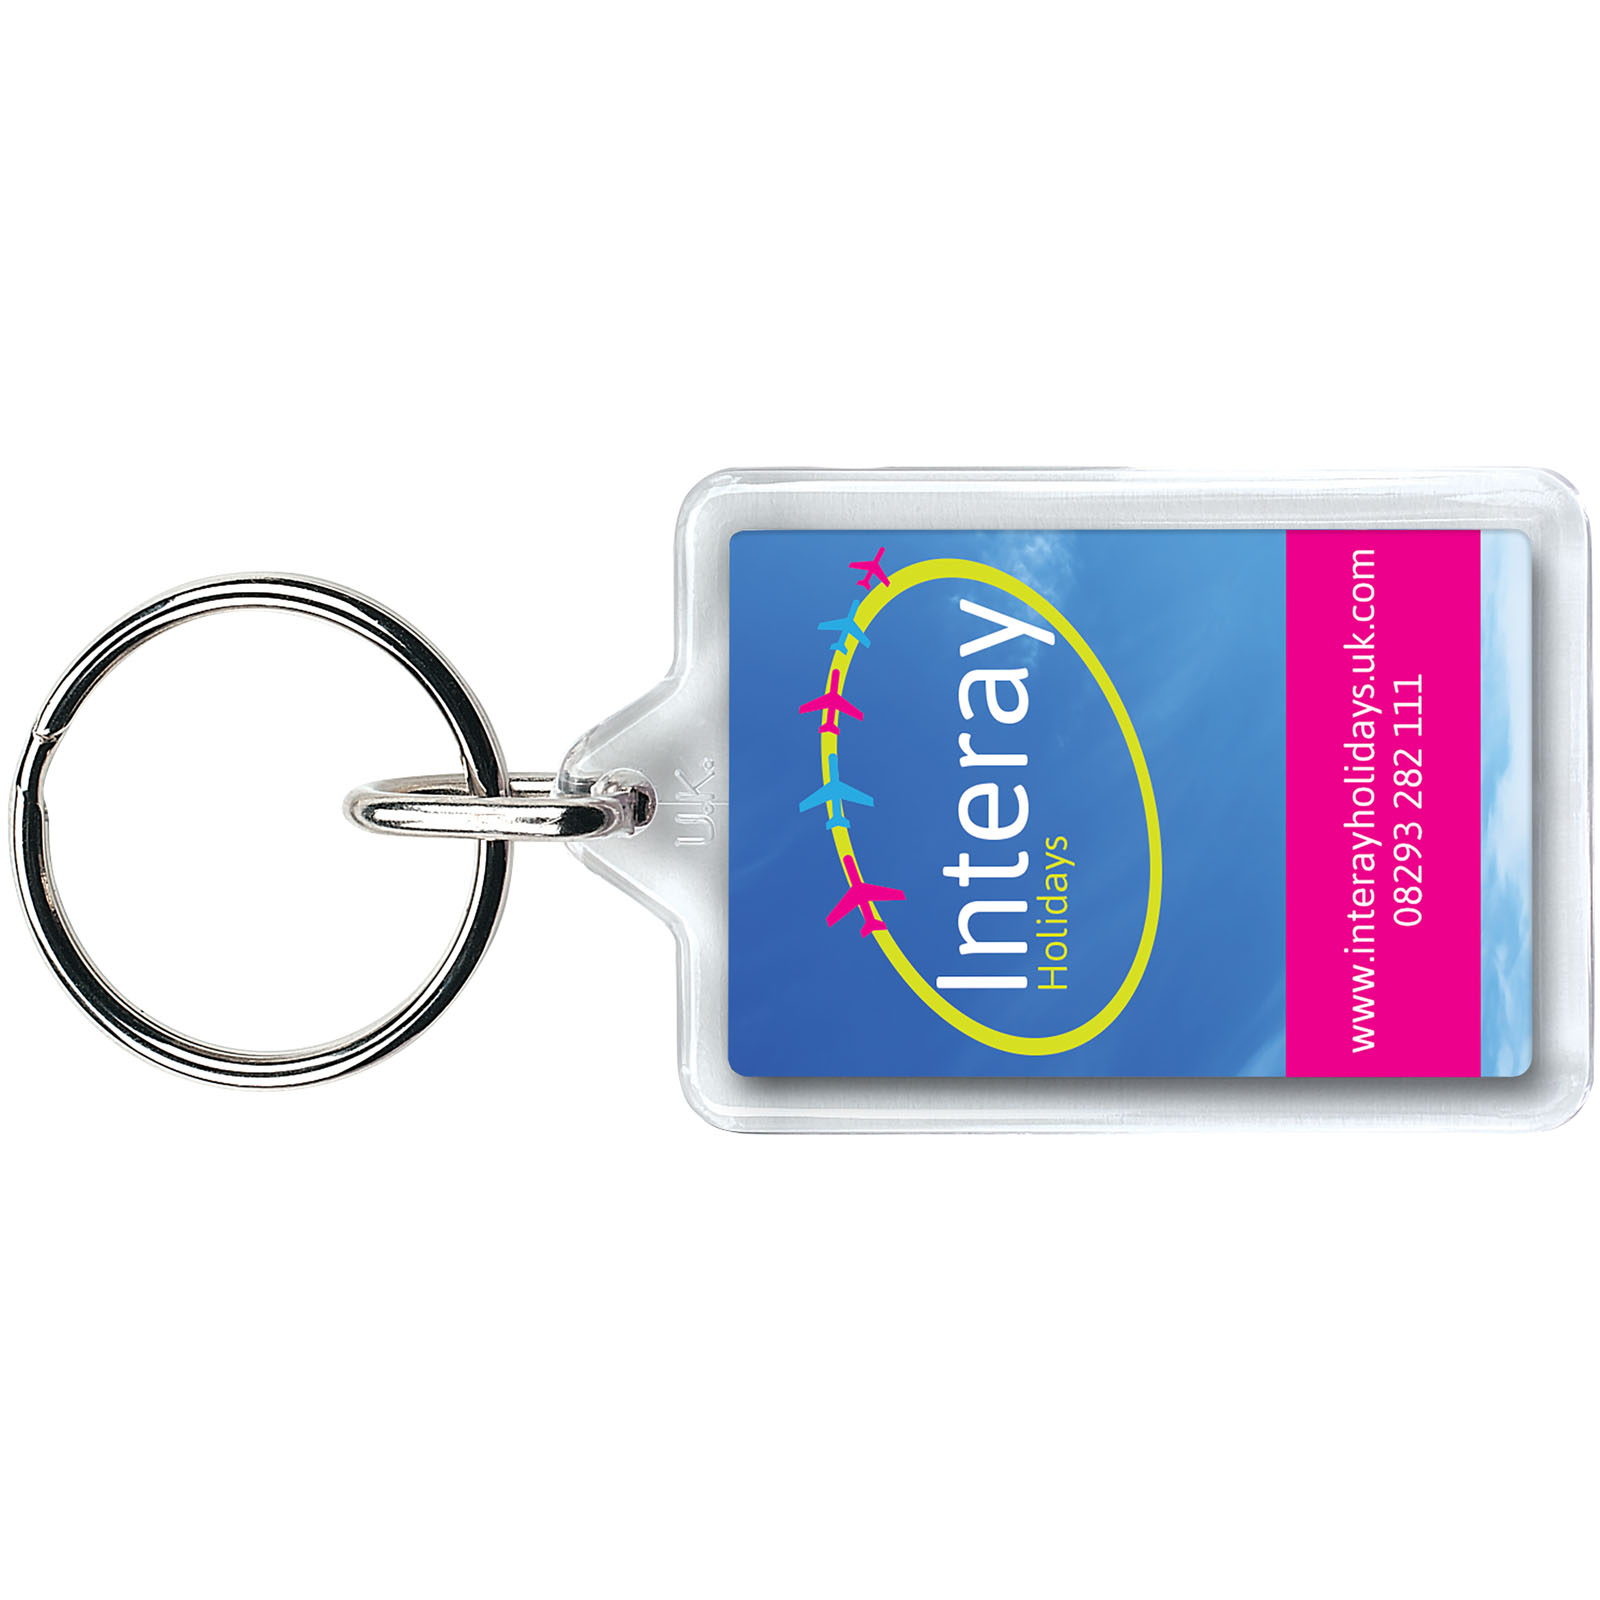 Advertising Keychains & Keyrings - Midi Y1 compact keychain - 2